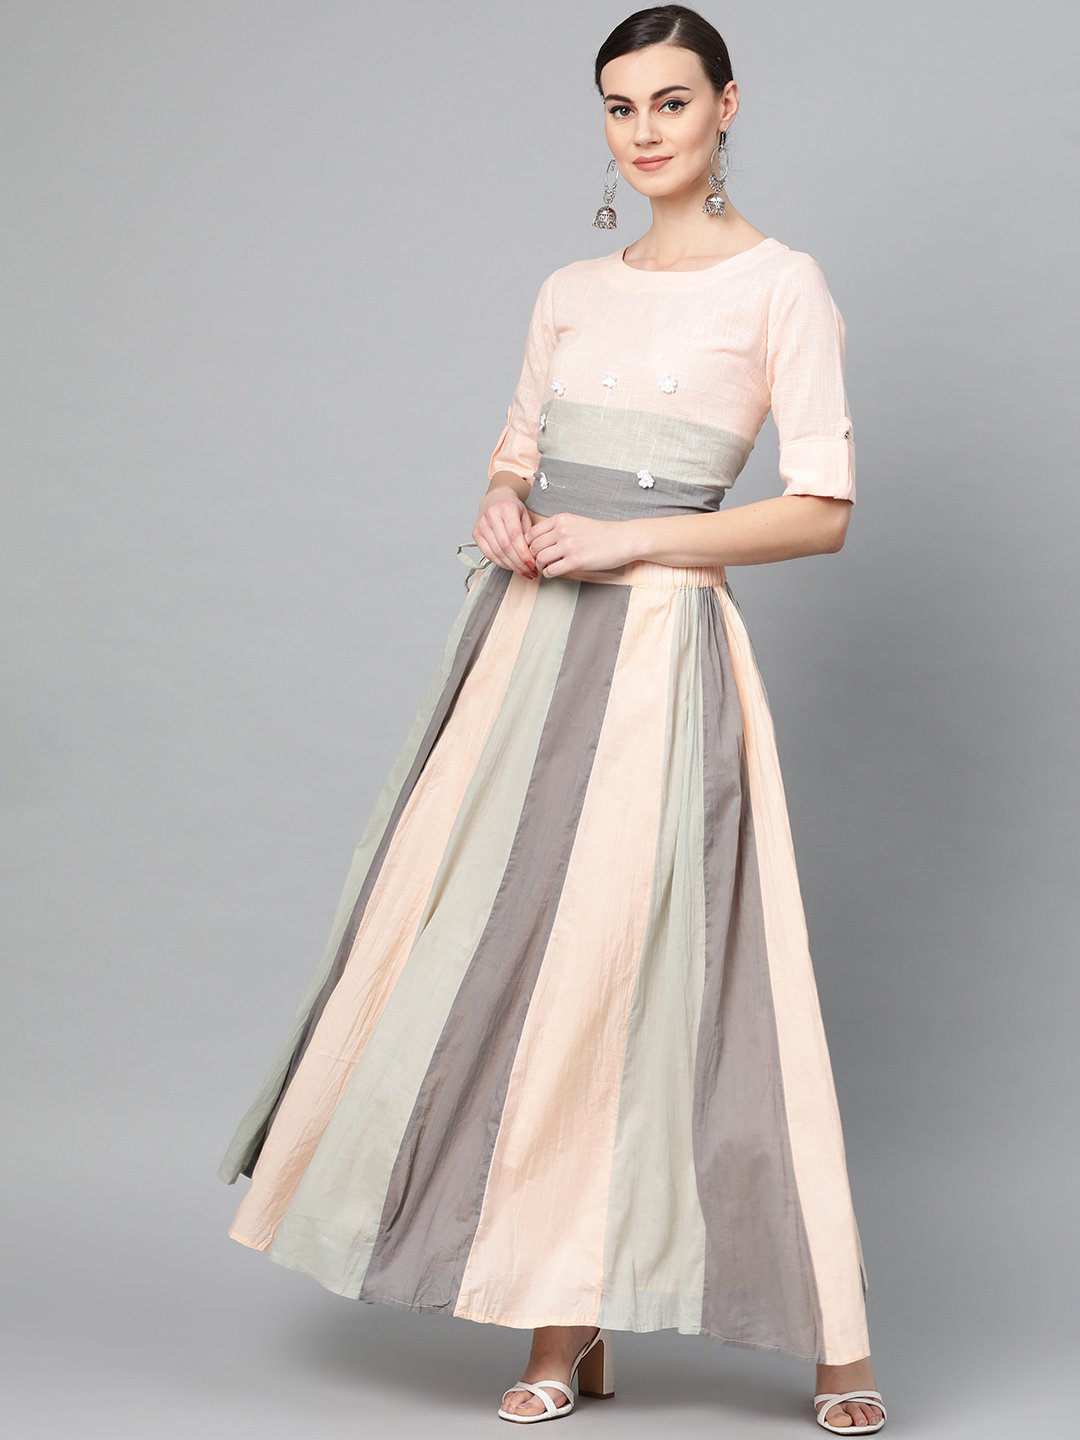 Ishin Women's Cotton Grey Solid A-Line Top Skirt Set